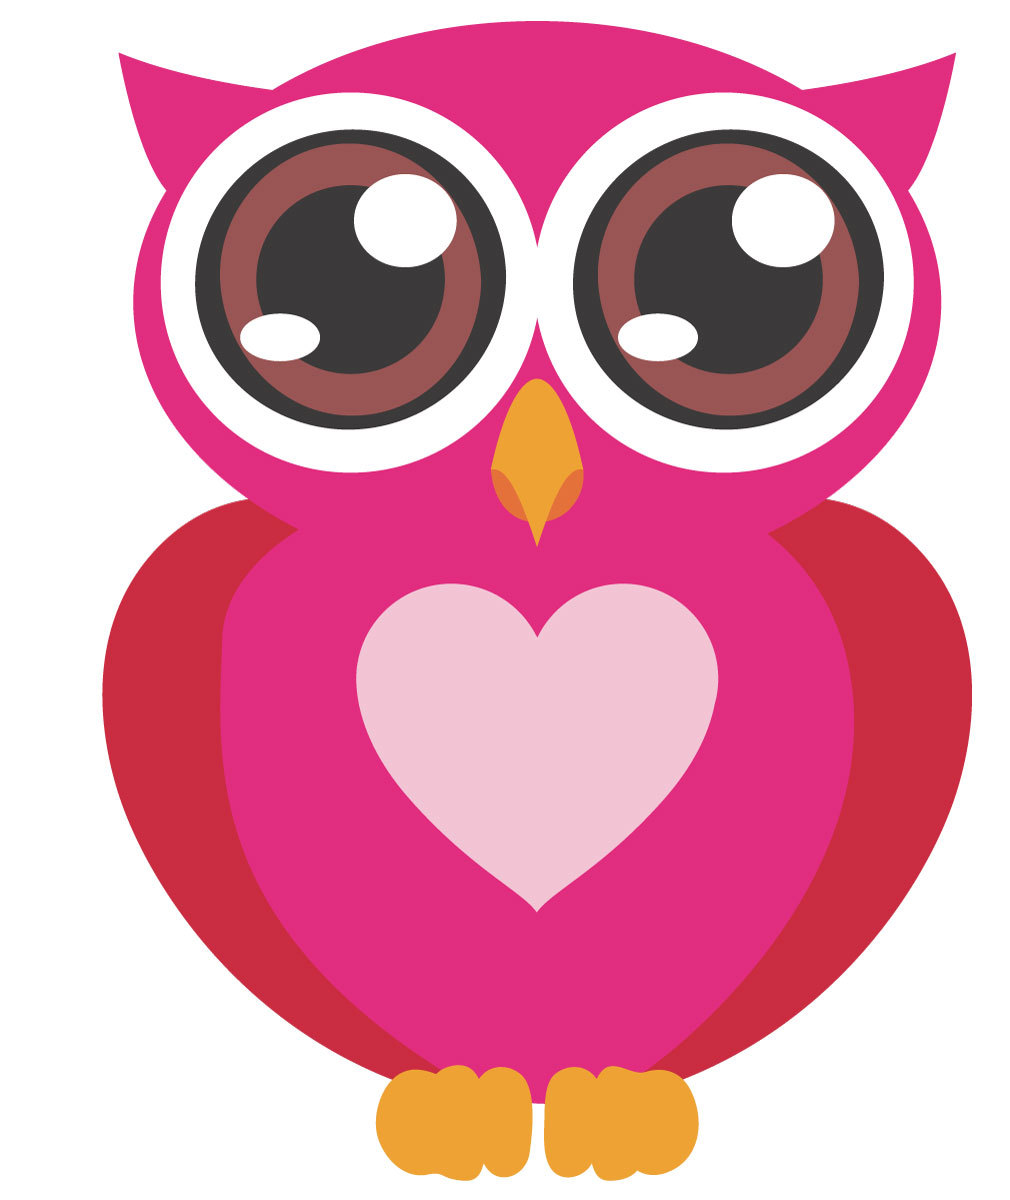 Owl Clipart Cute - ClipArt Best